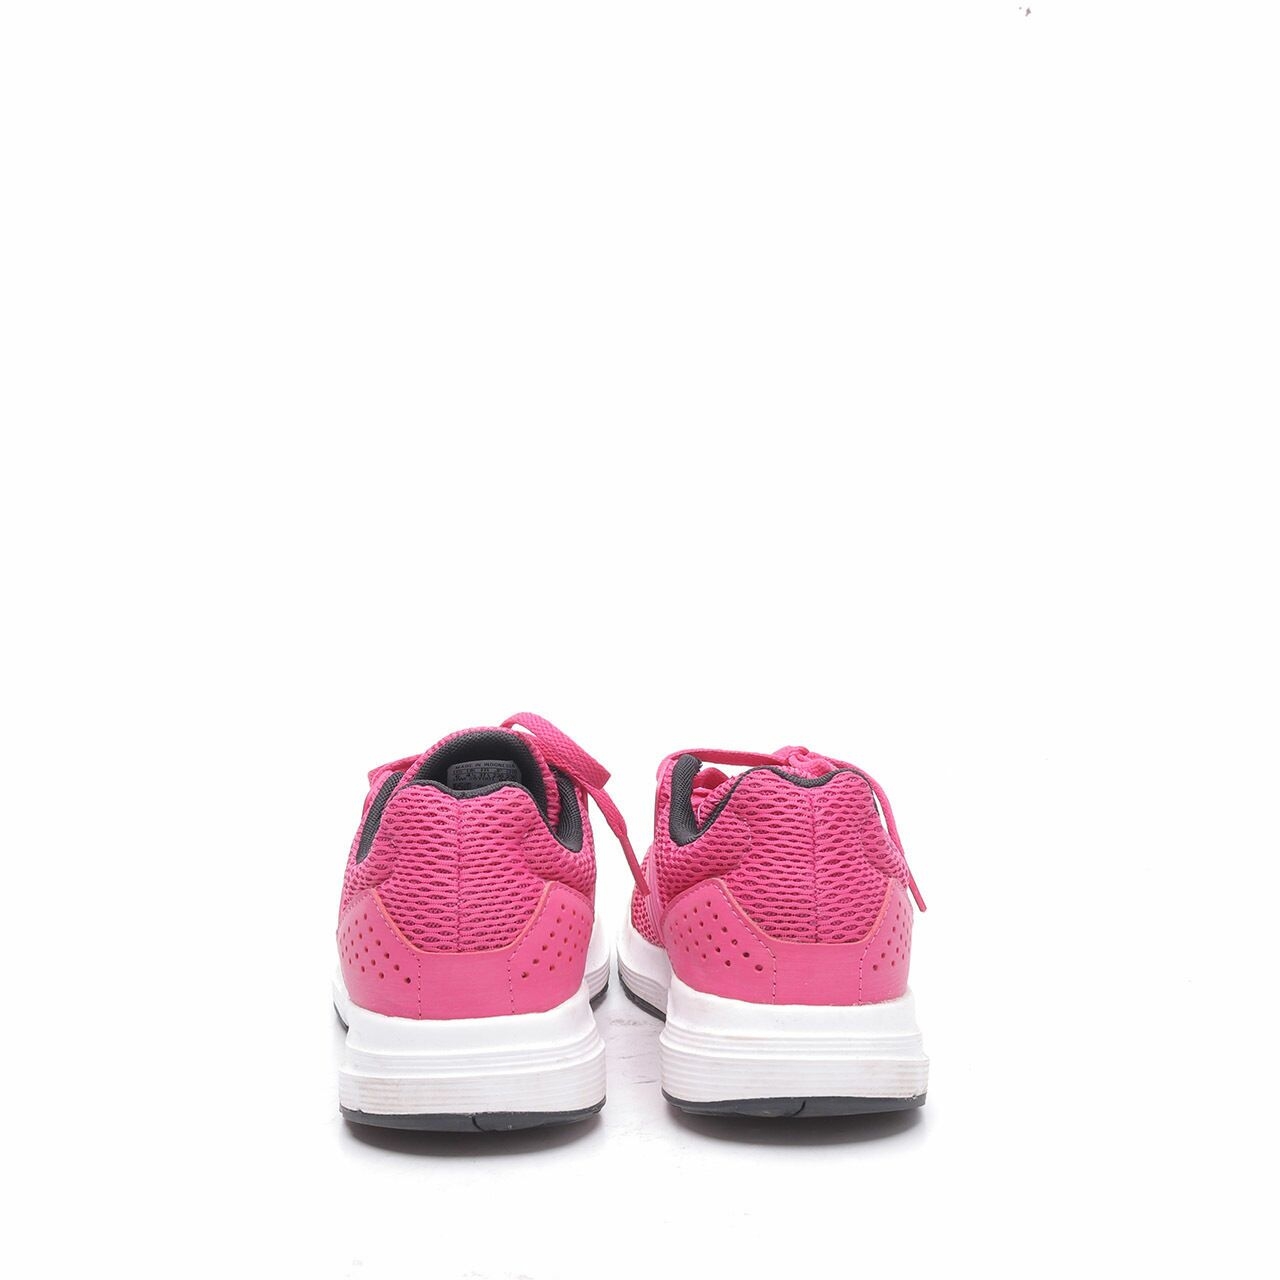 Adidas Galaxy 4 Pink Sneakers